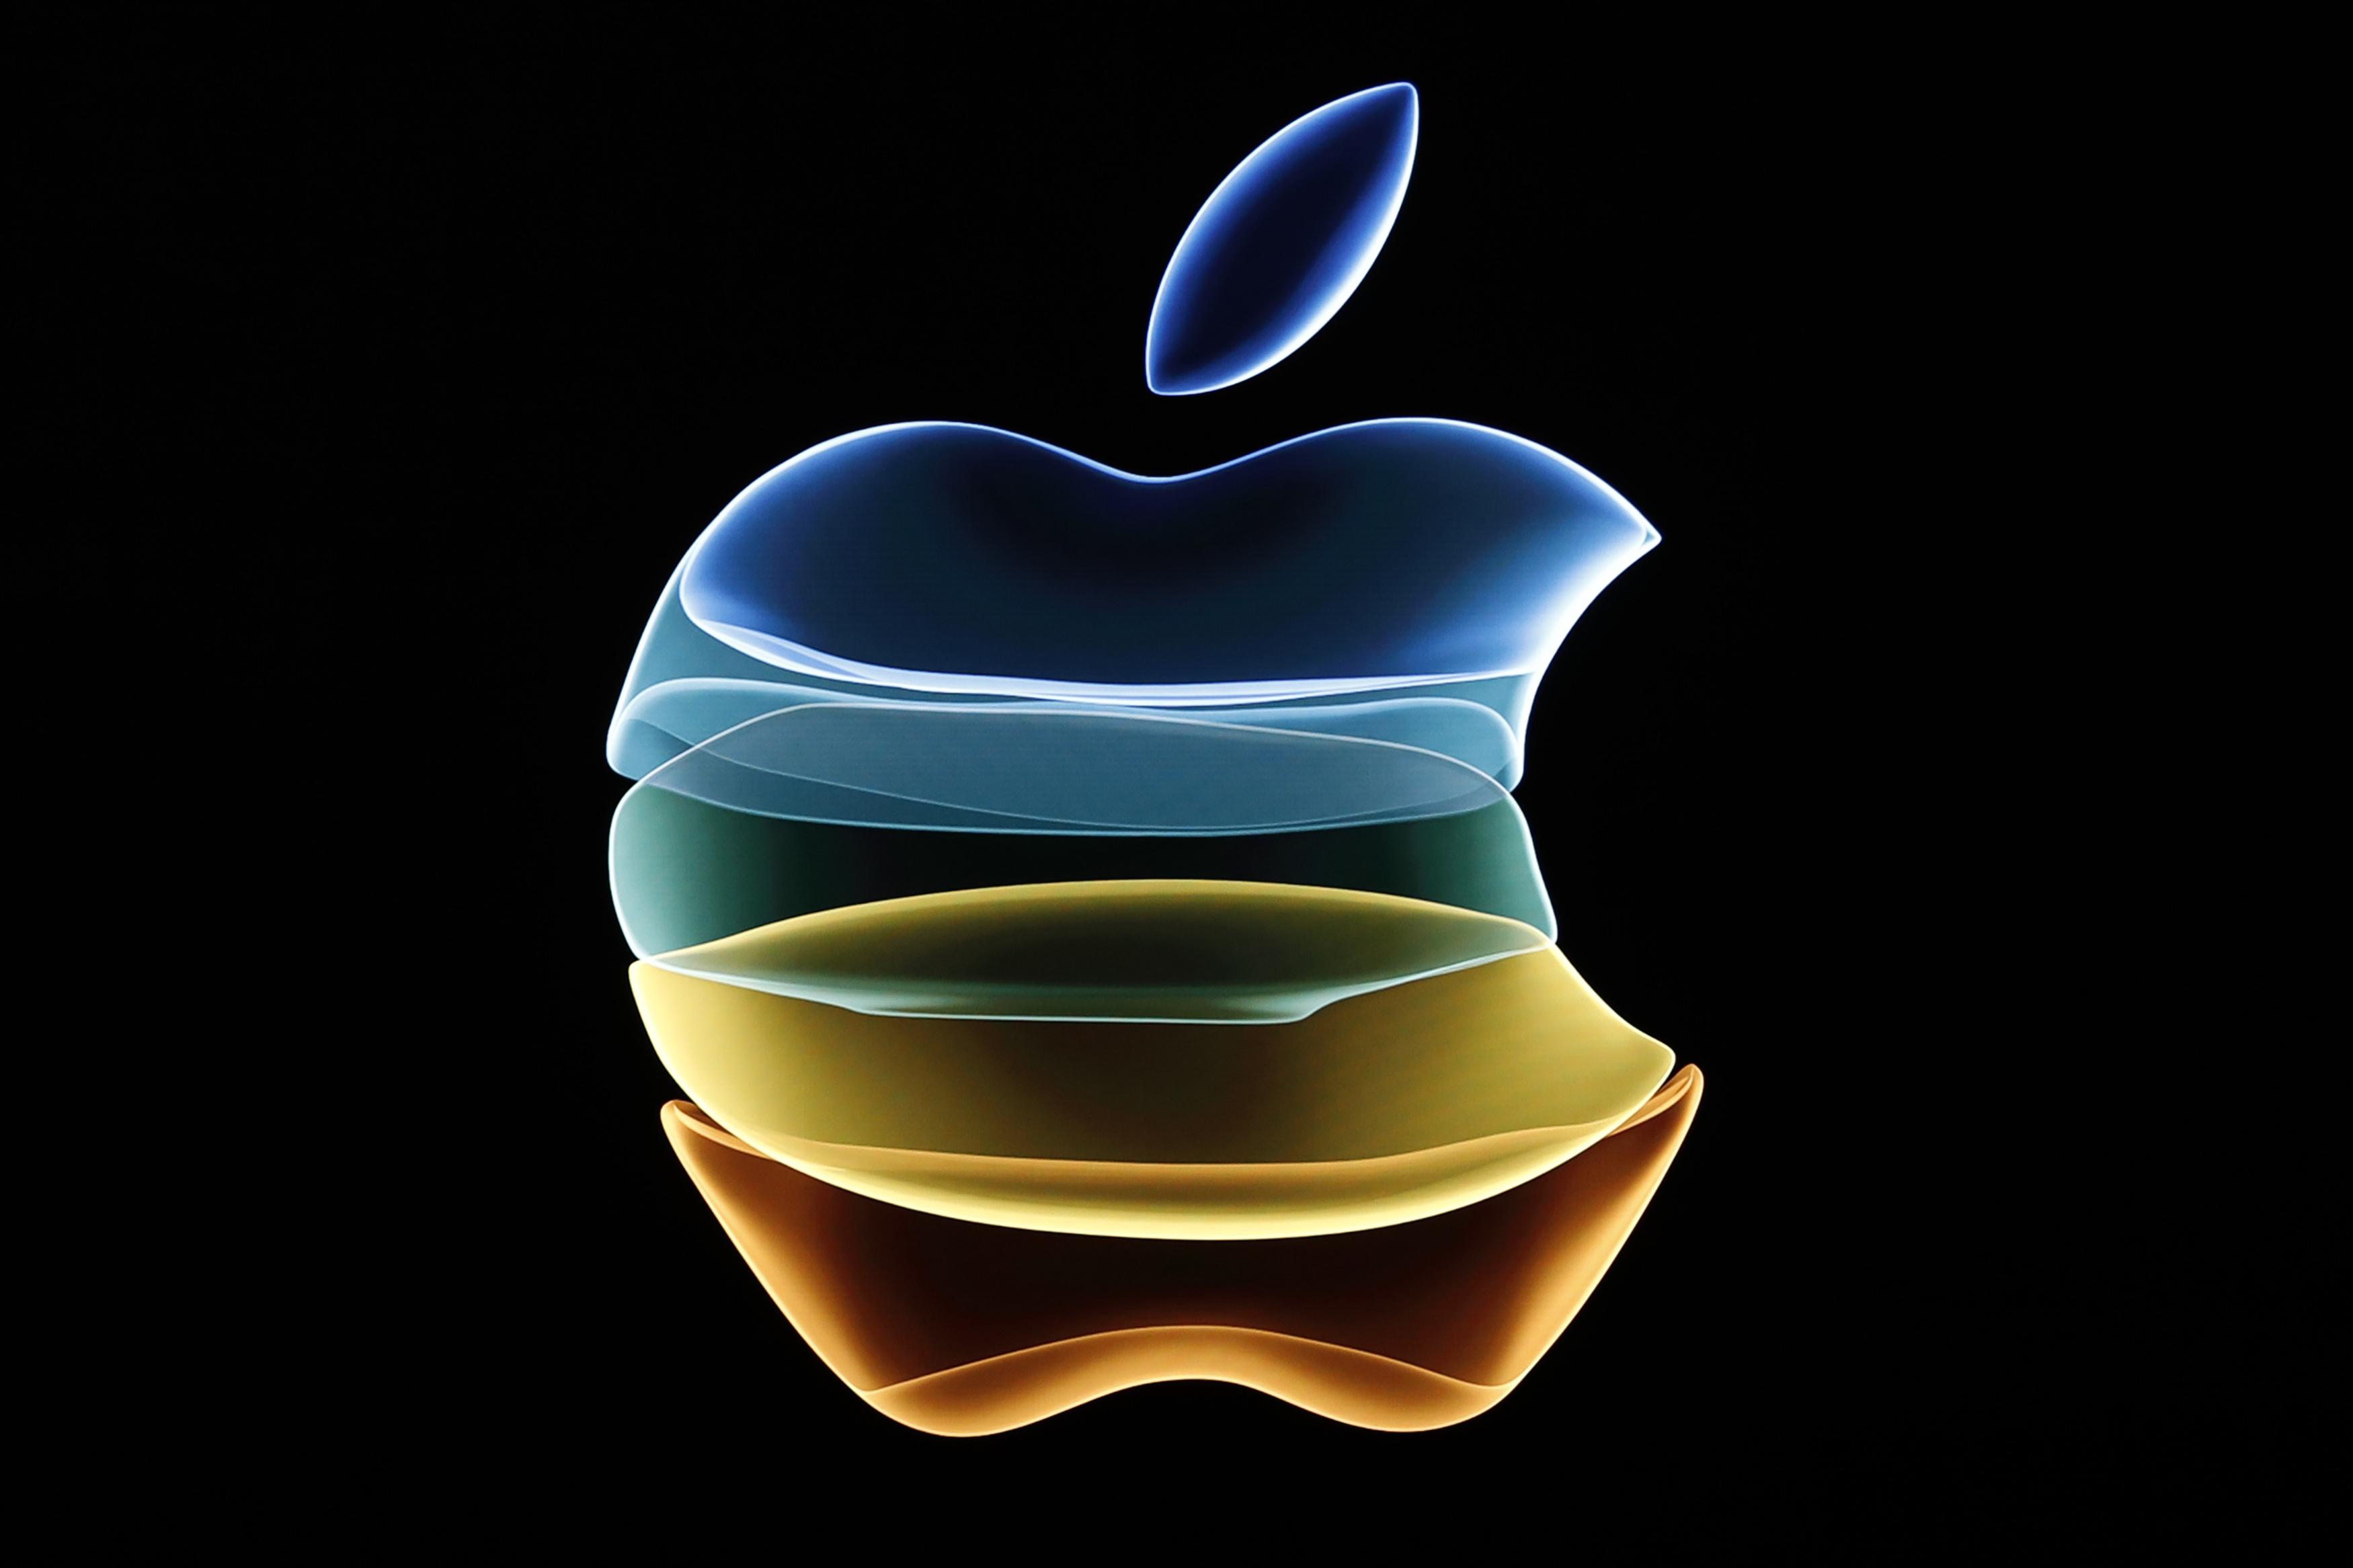 Wallpapers of the week: Apple logo